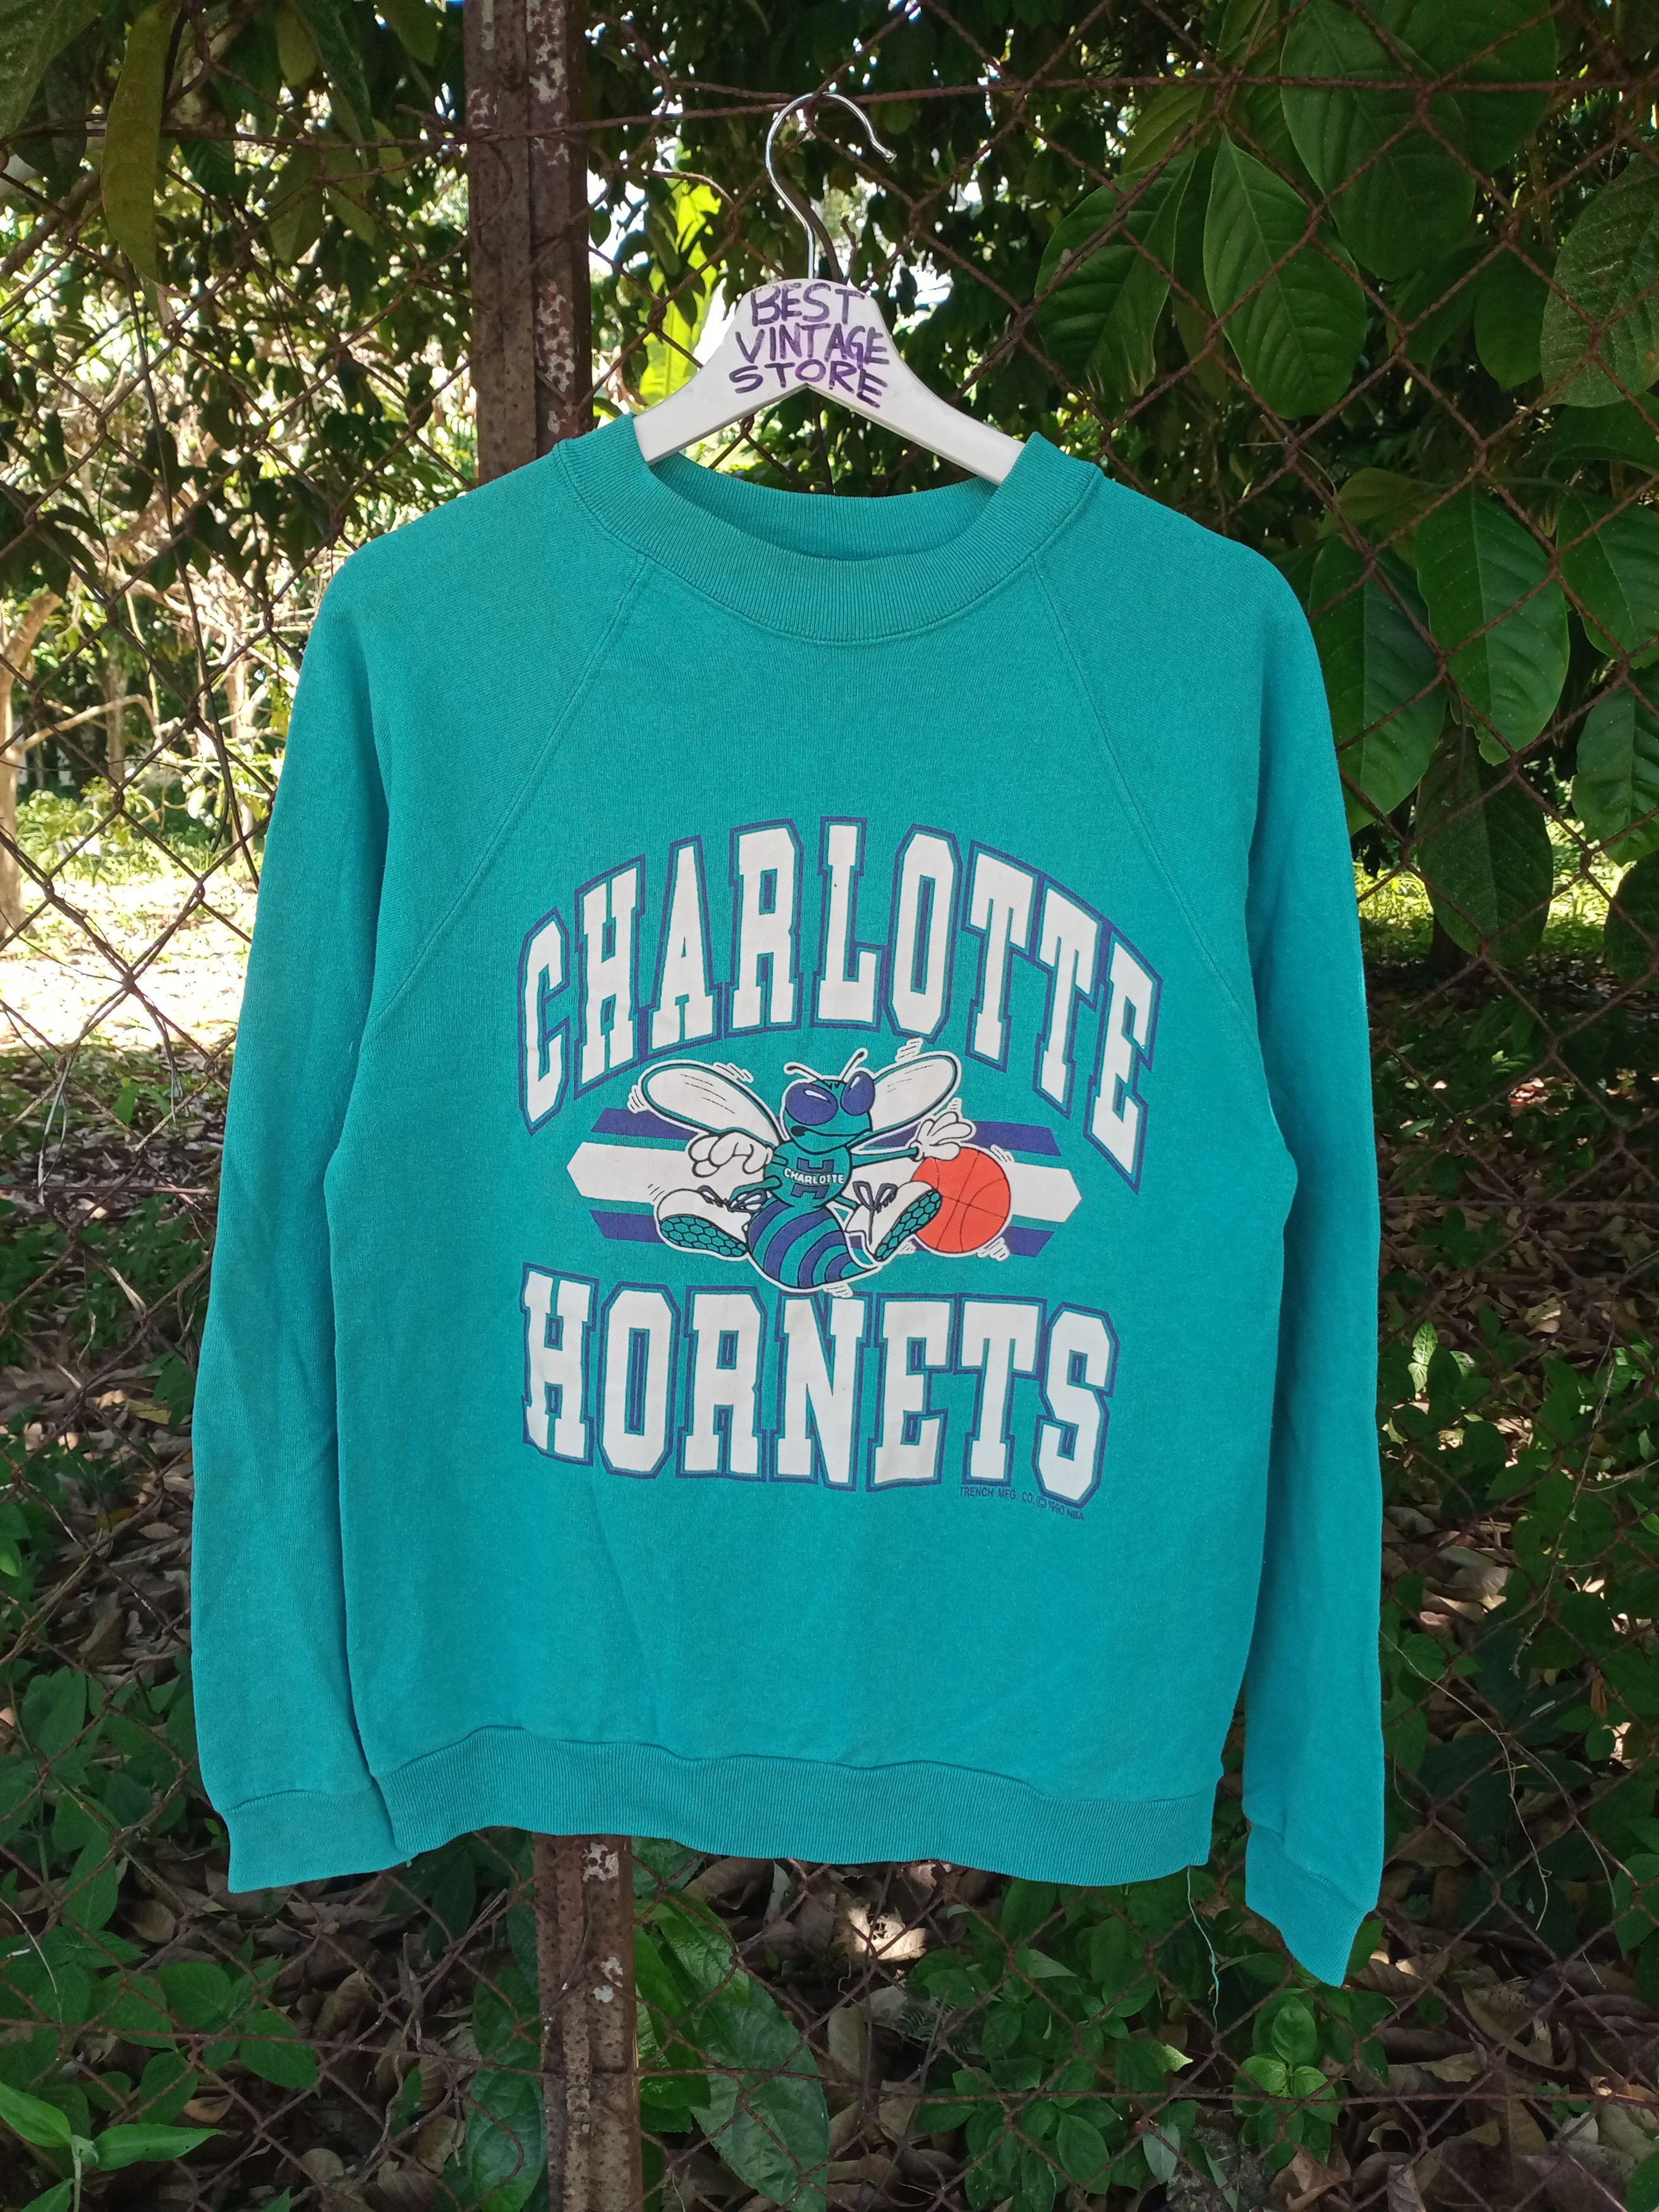 Vintage Vintage 90s Charlotte Hornets Sweatshirt Size US S / EU 44-46 / 1 - 1 Preview